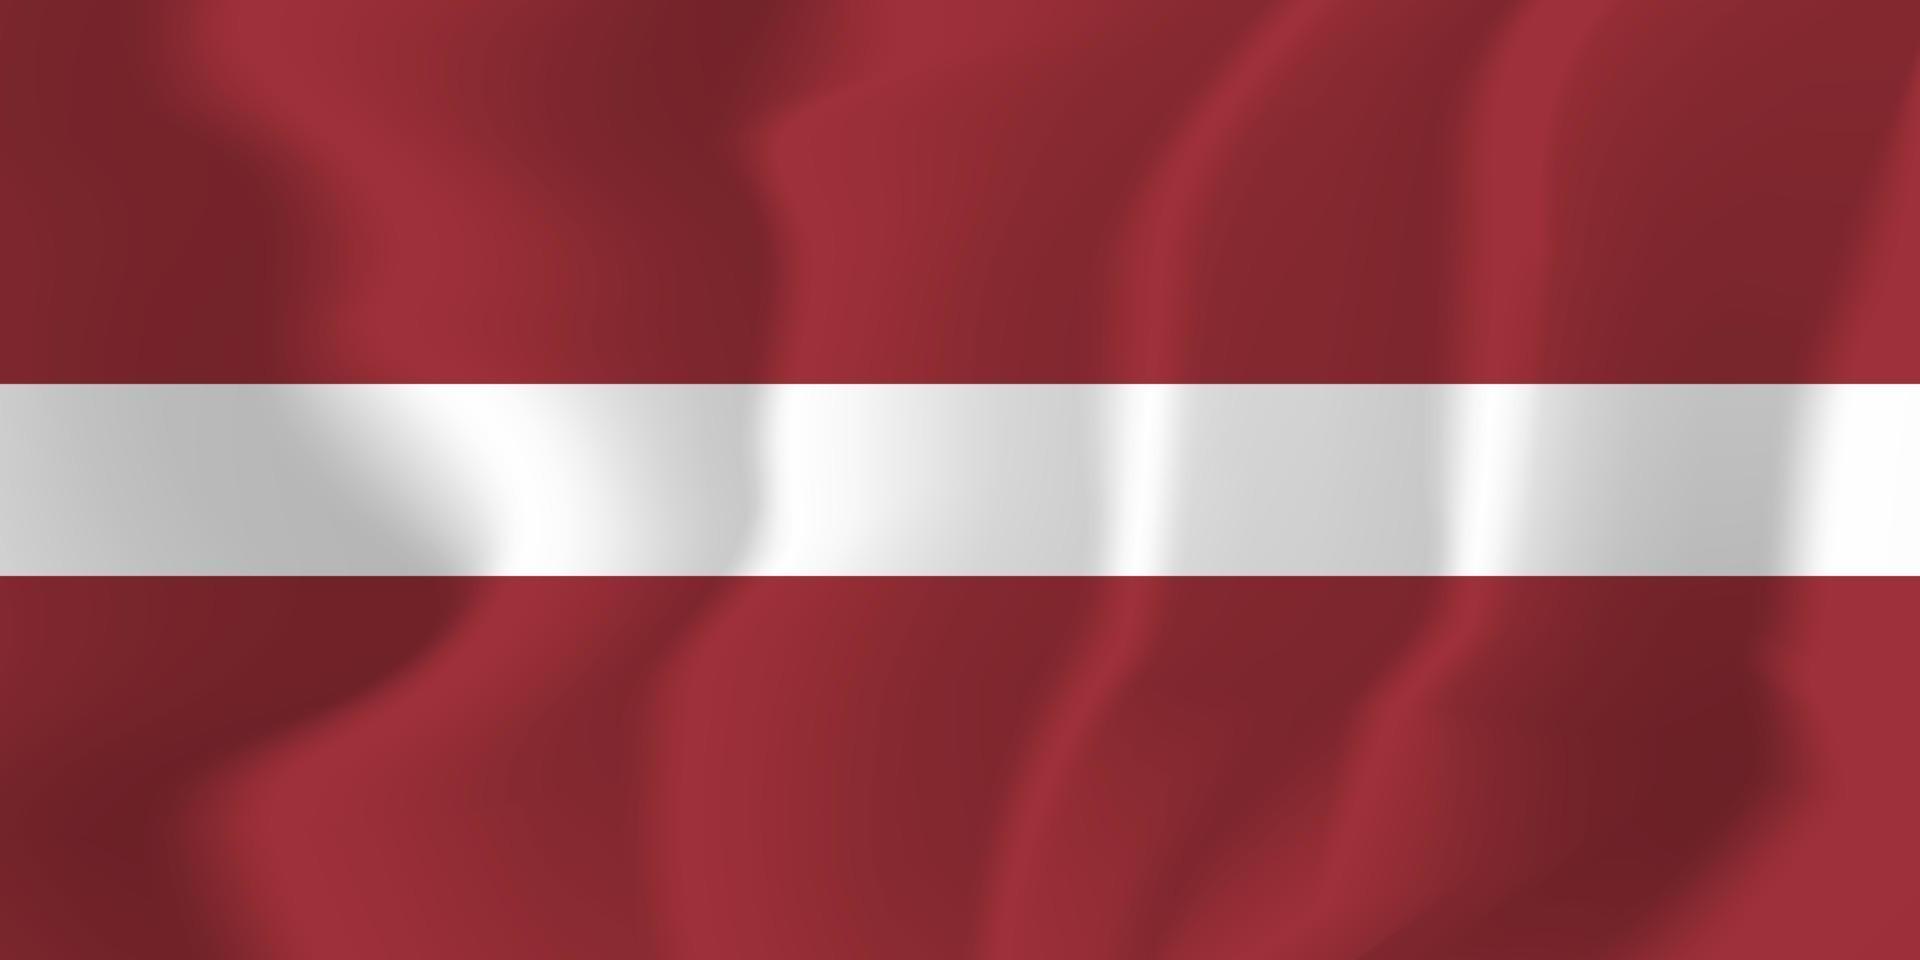 Latvia National Flag Waving Background Illustration vector